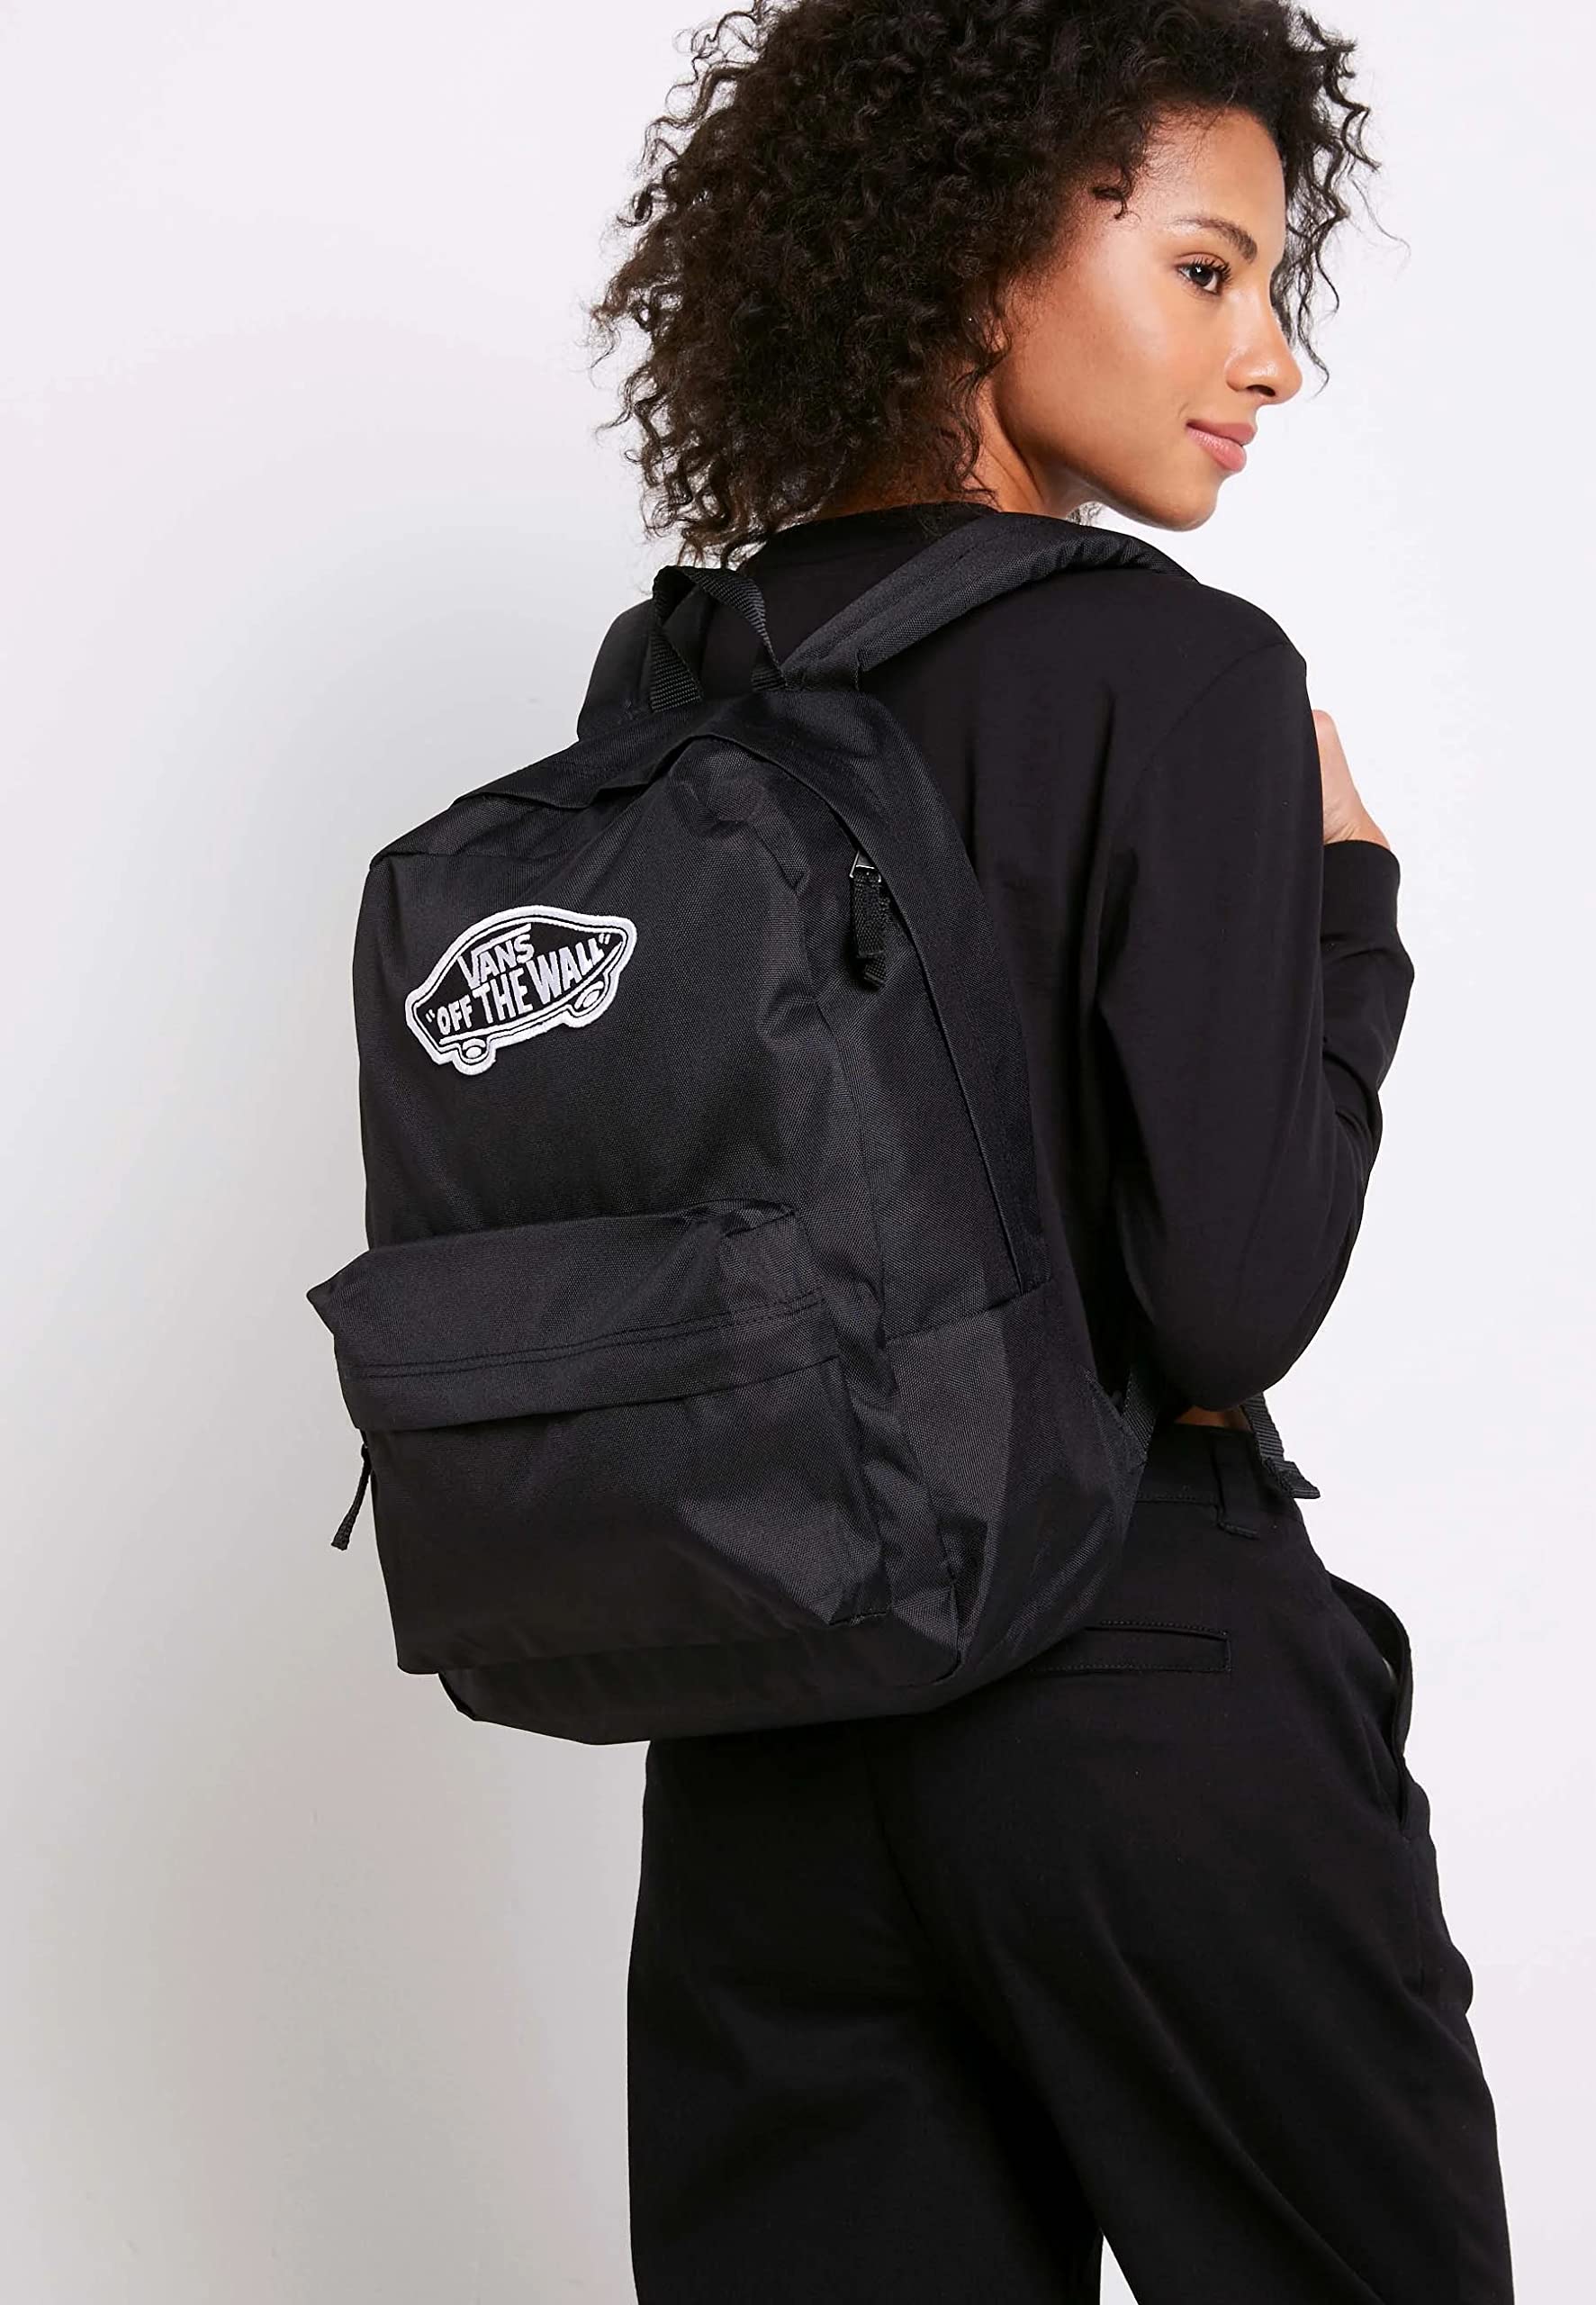 Vans | Realm Backpack (True Black, One Size)